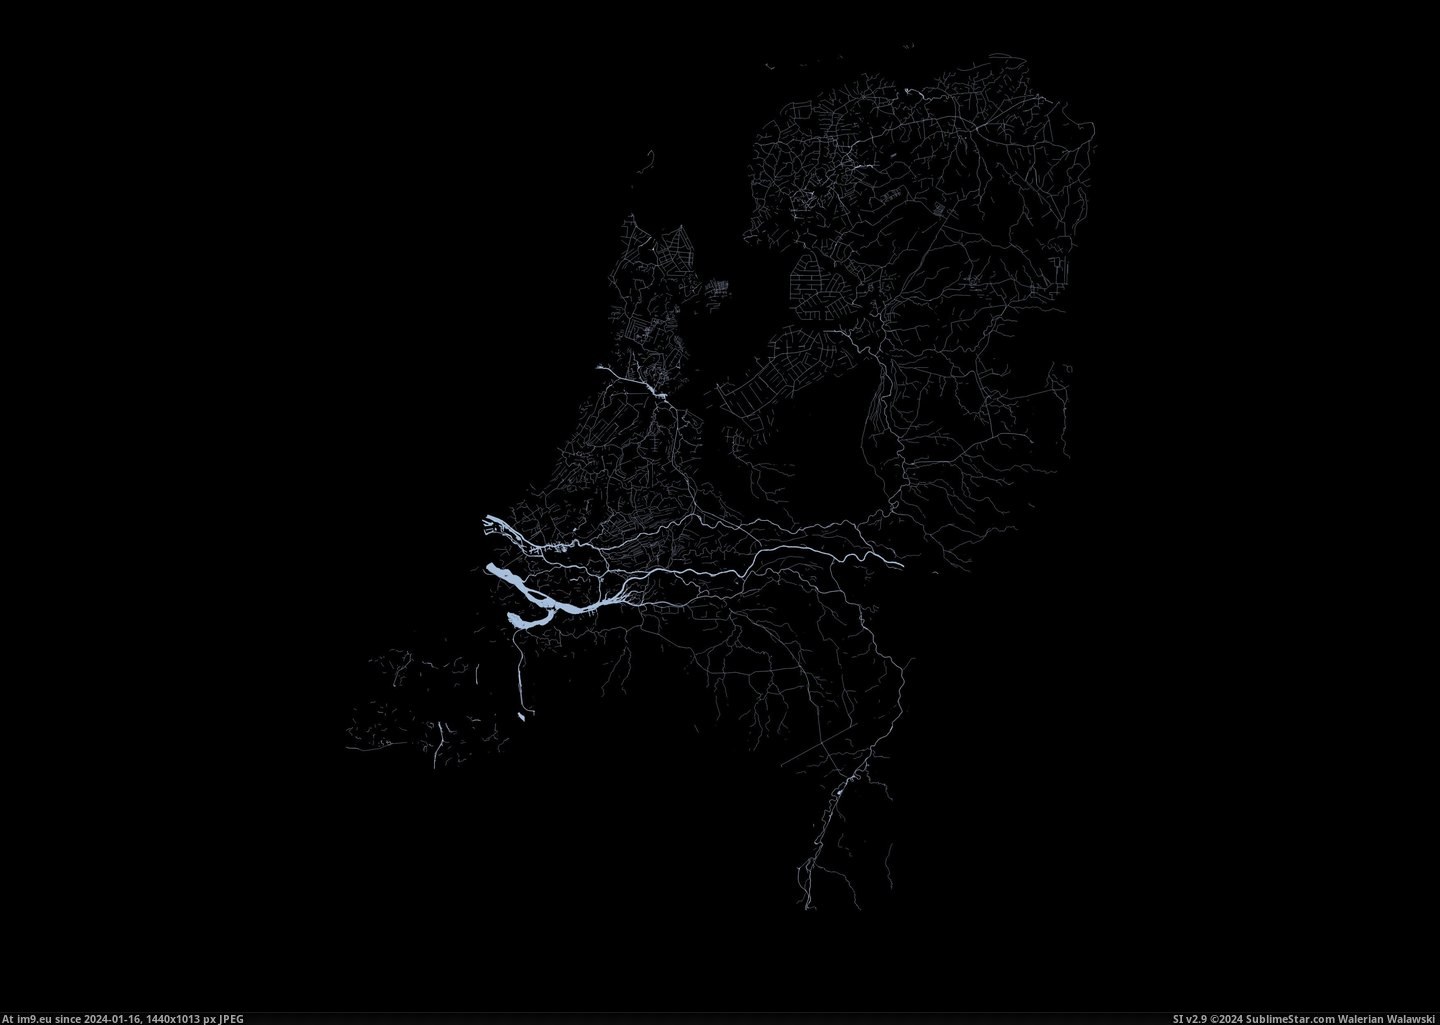 #Netherlands #Rivers #Canals #Visualized #3507x2480 [Mapporn] The Netherlands visualized by only rivers and canals. [3507x2480] (dataisbeautiful) Pic. (Bild von album My r/MAPS favs))